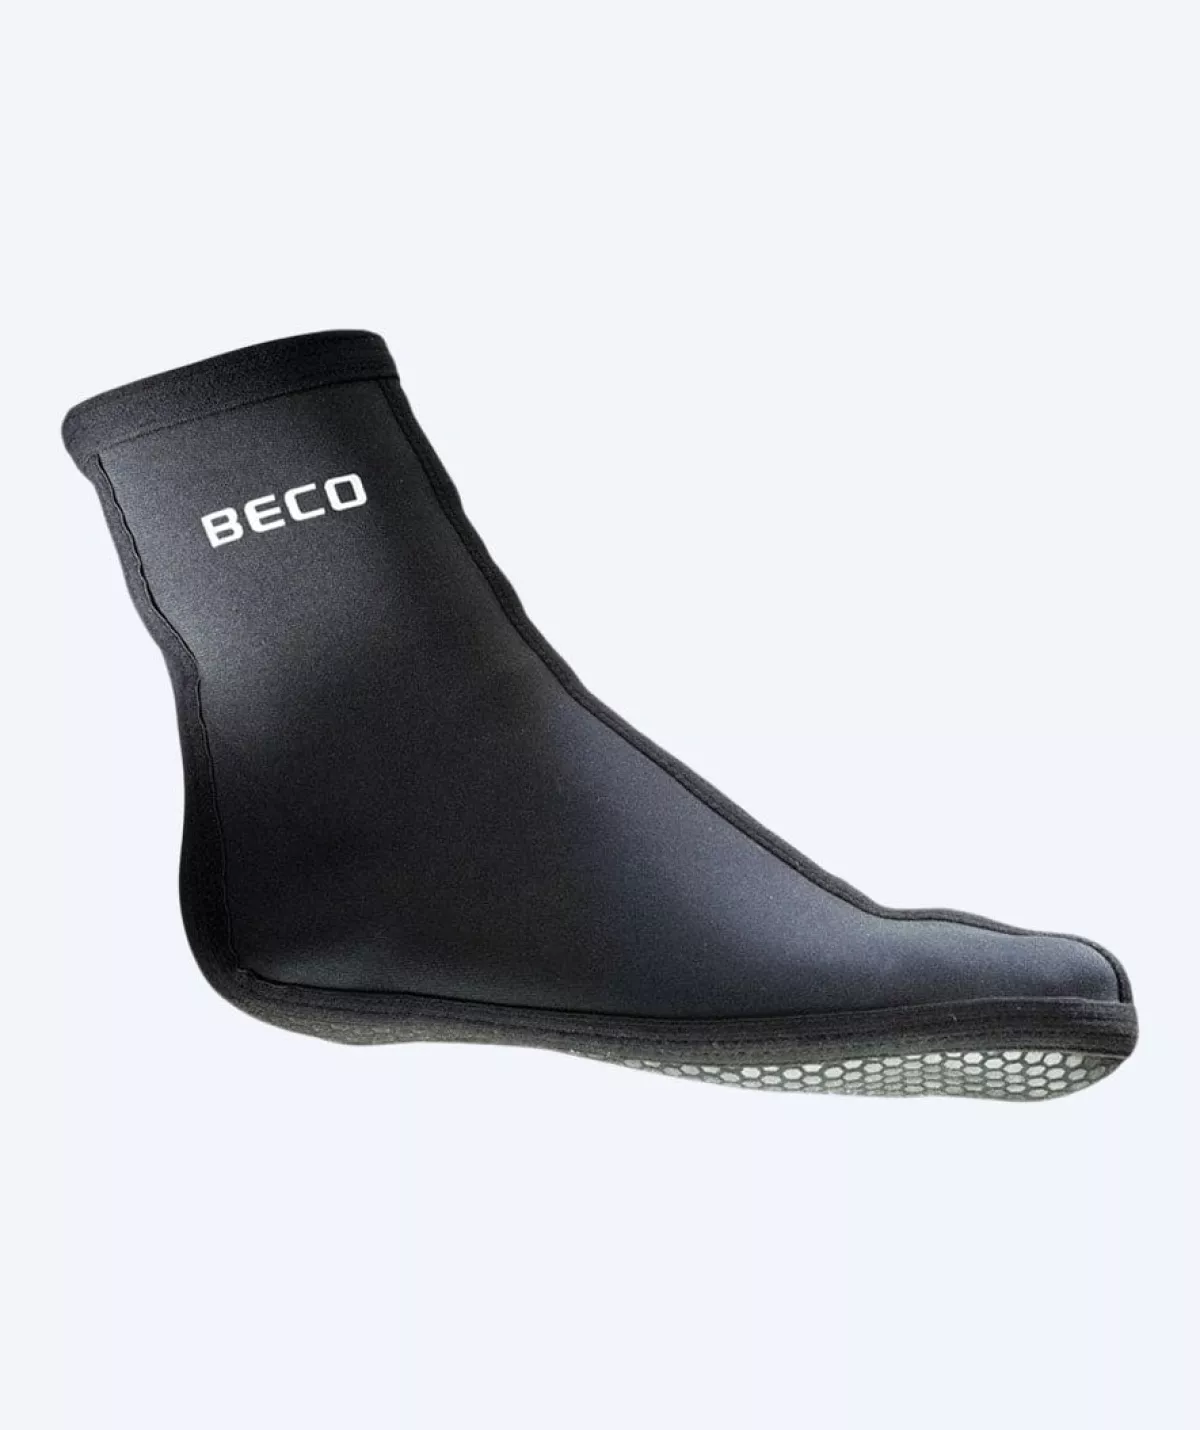 #1 - Beco neopren sokker til åbent vand - Sort